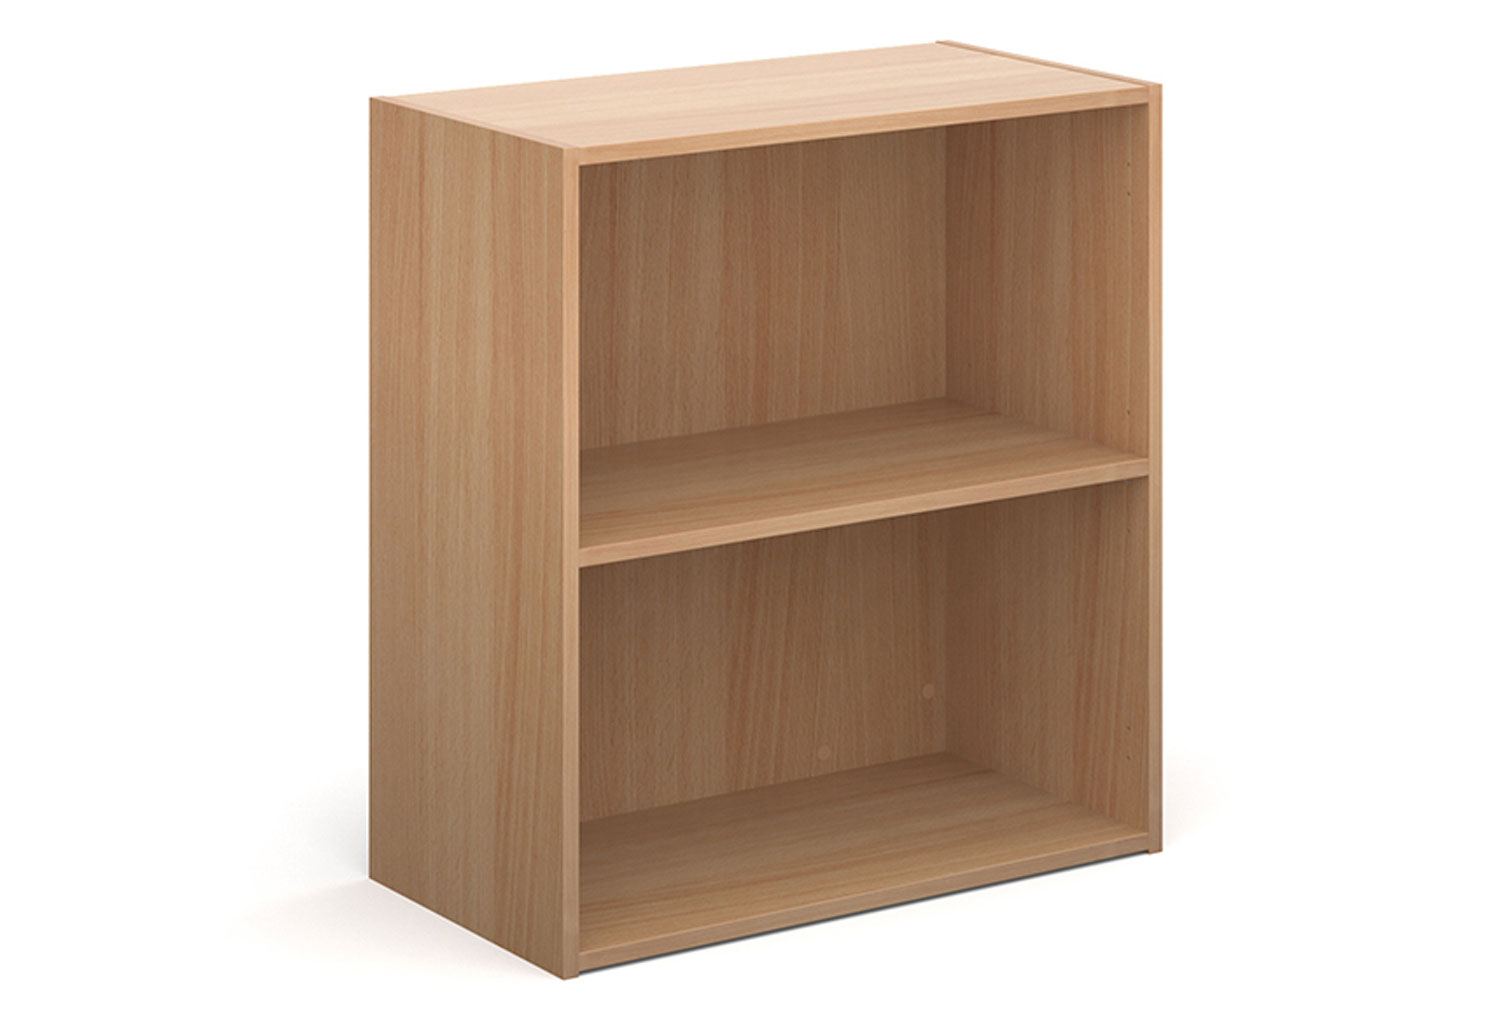 Value Line Classic+ Office Bookcases, 1 Shelf - 76wx39dx83h (cm), Beech